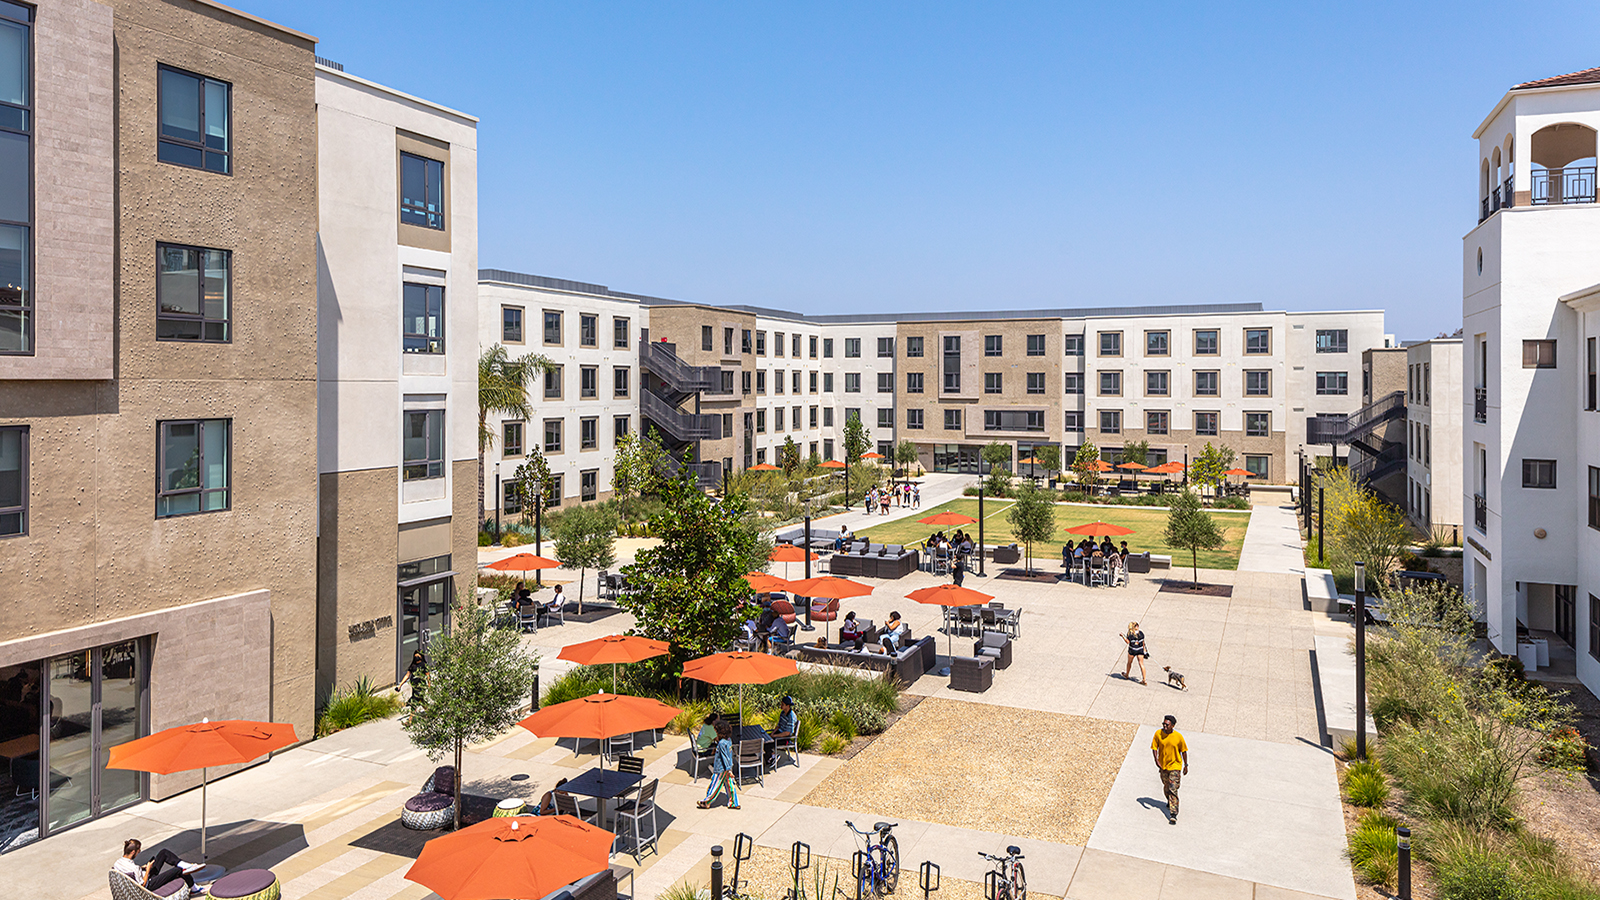 Loyola Marymount University Student Housing in Los Angeles, courtyard